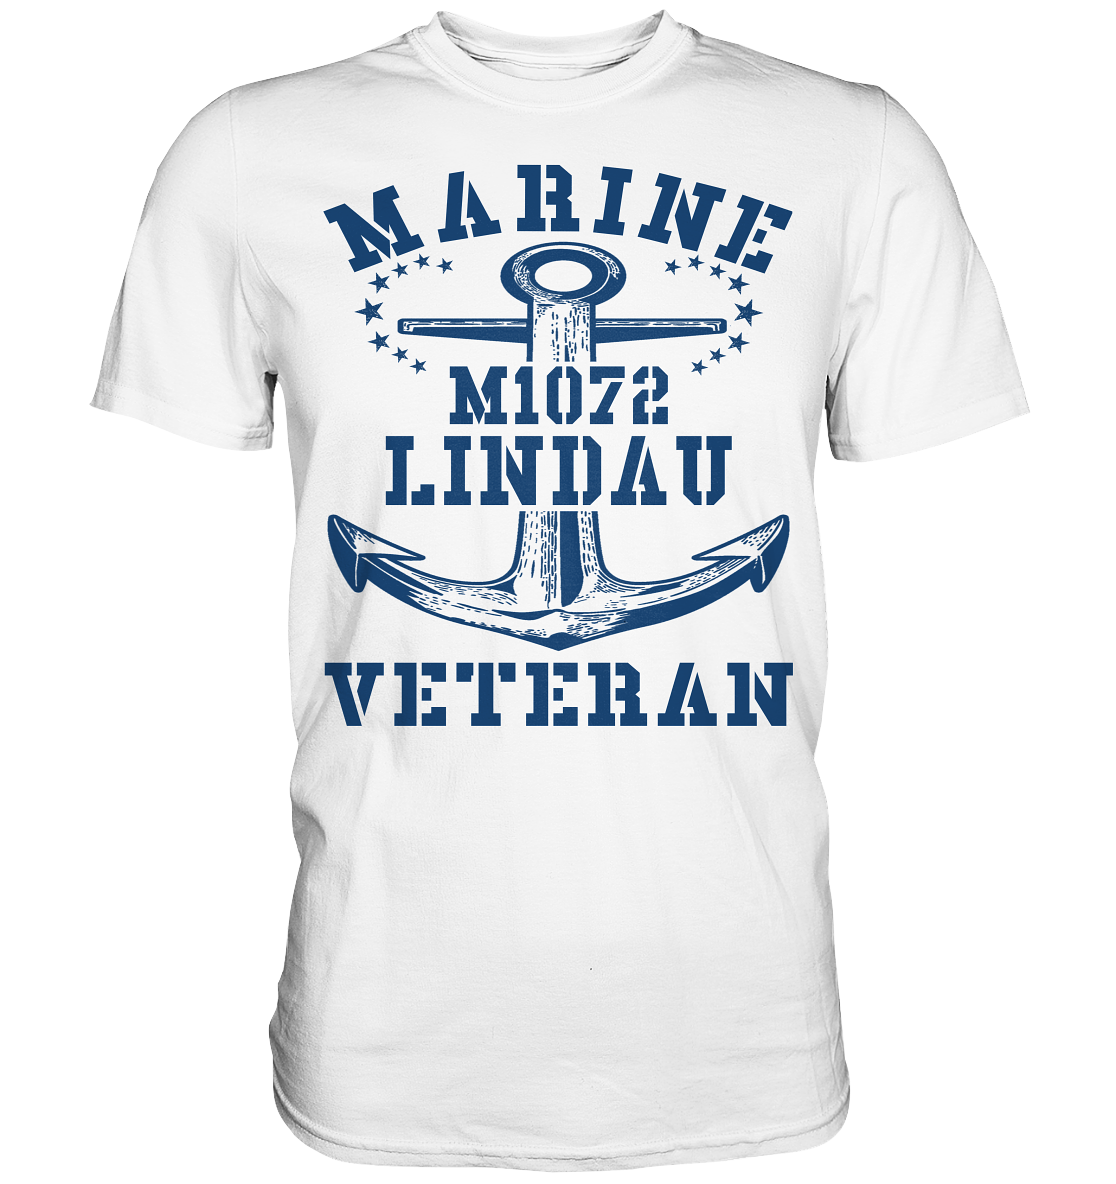 MARINE VETERAN M1072 LINDAU - Premium Shirt